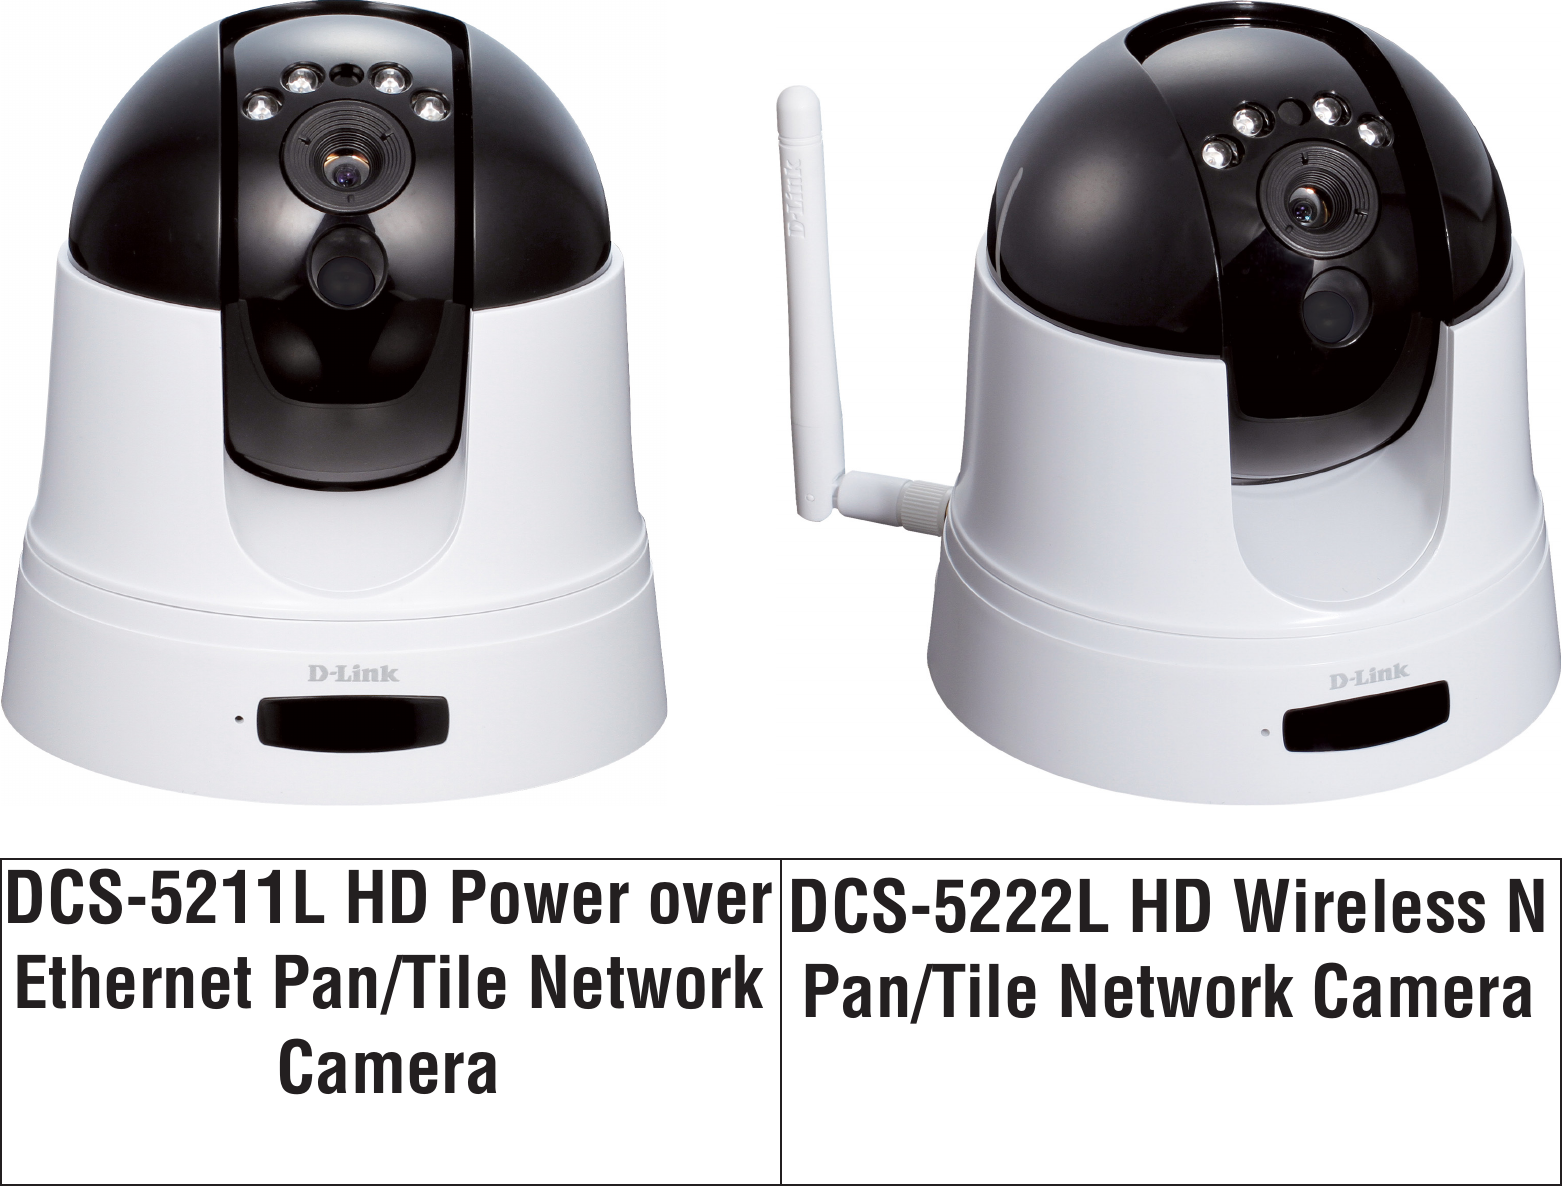 DCS-5211L HD Power over Ethernet Pan/Tile Network CameraDCS-5222L HD Wireless N Pan/Tile Network Camera